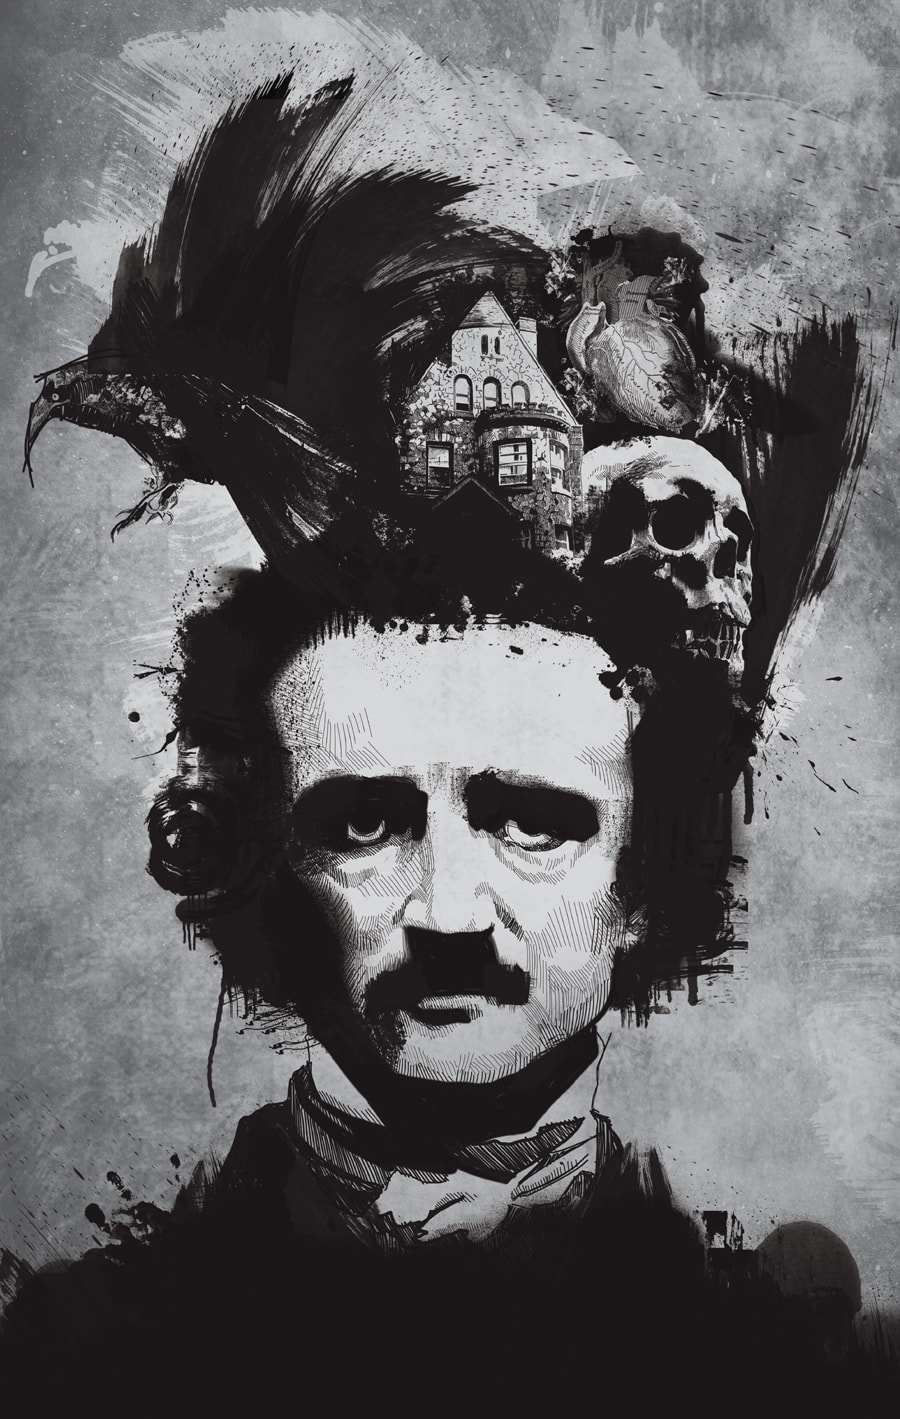 15 Edgar Allan Poe Facts: The Man Behind the Myths